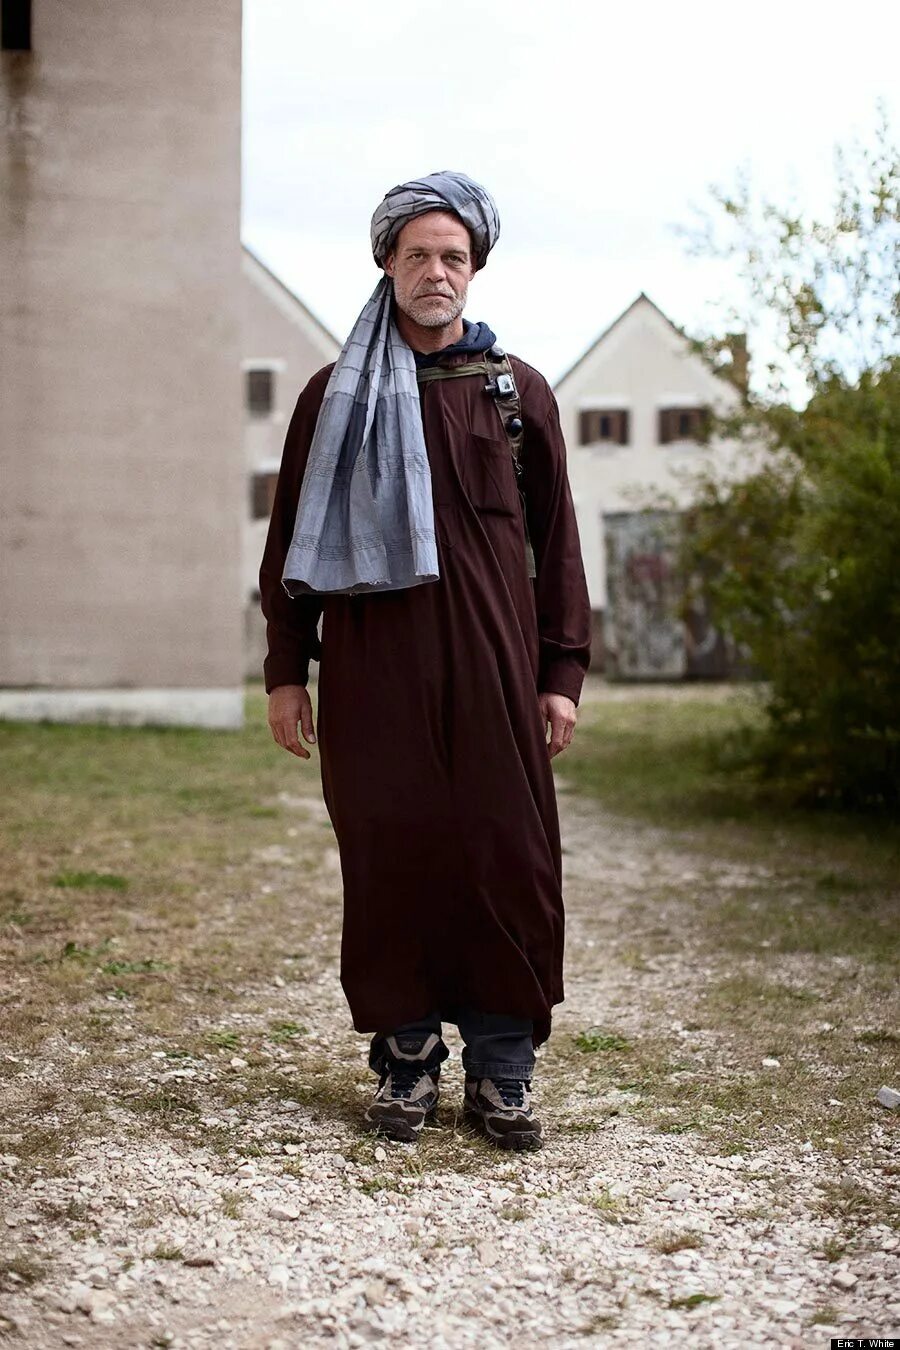 Пуштуны национальный костюм. Пуштуны Афганистана одежда. Национальная одежда Афганистана. Национальная одежда Пуштунов.